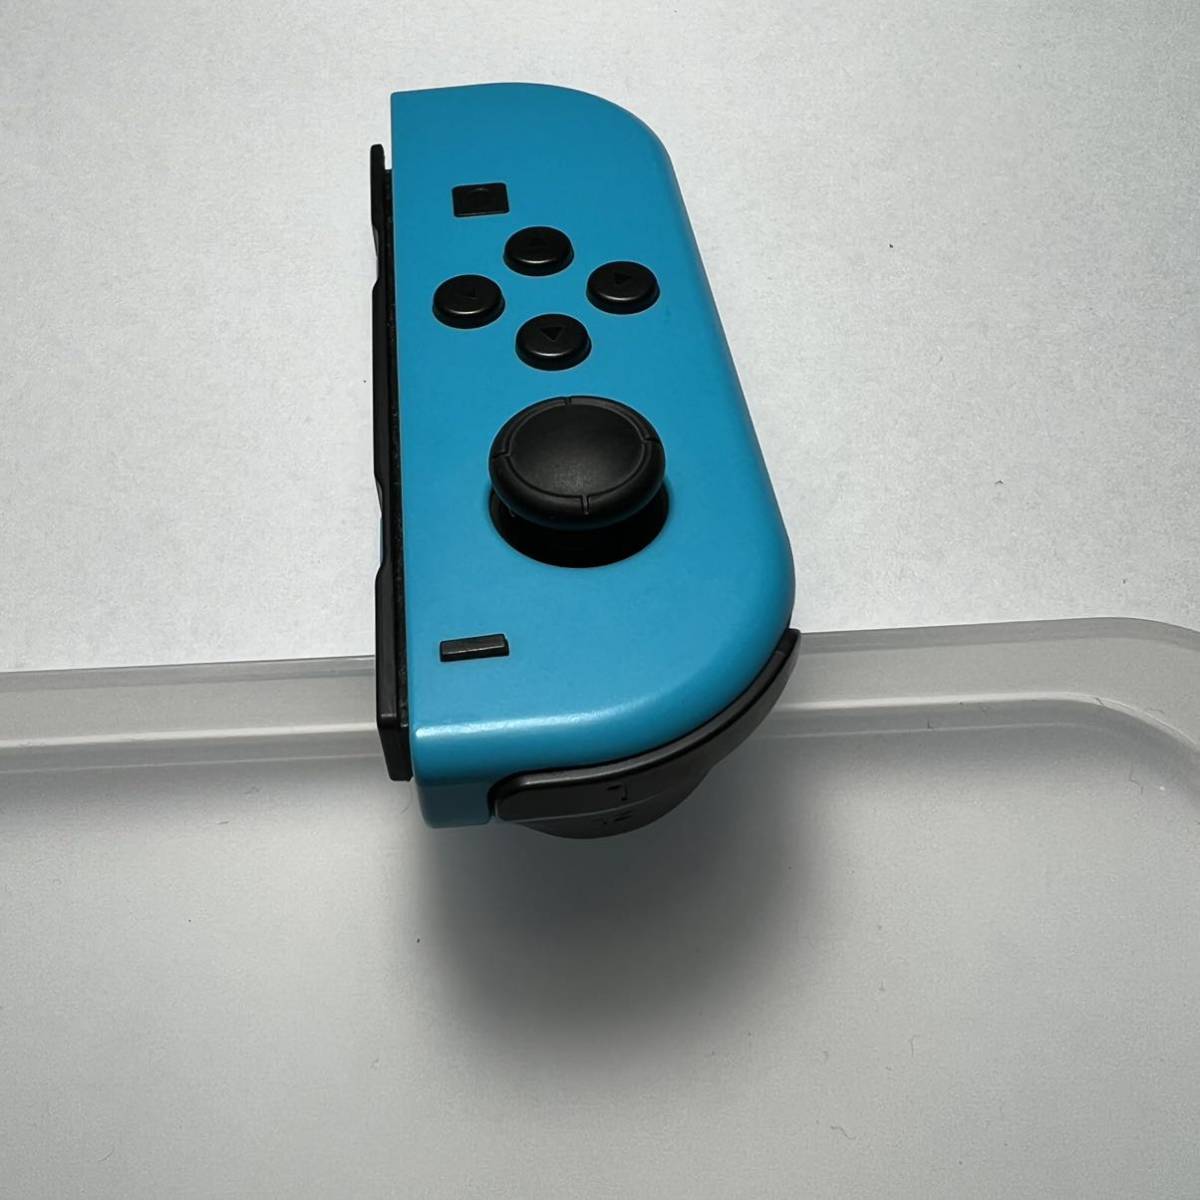 L5983 Nintendo Switch ジョイコン Joy-Con 左 ( L ) 任天堂 ネオンブルー 動作確認済み 保証あり